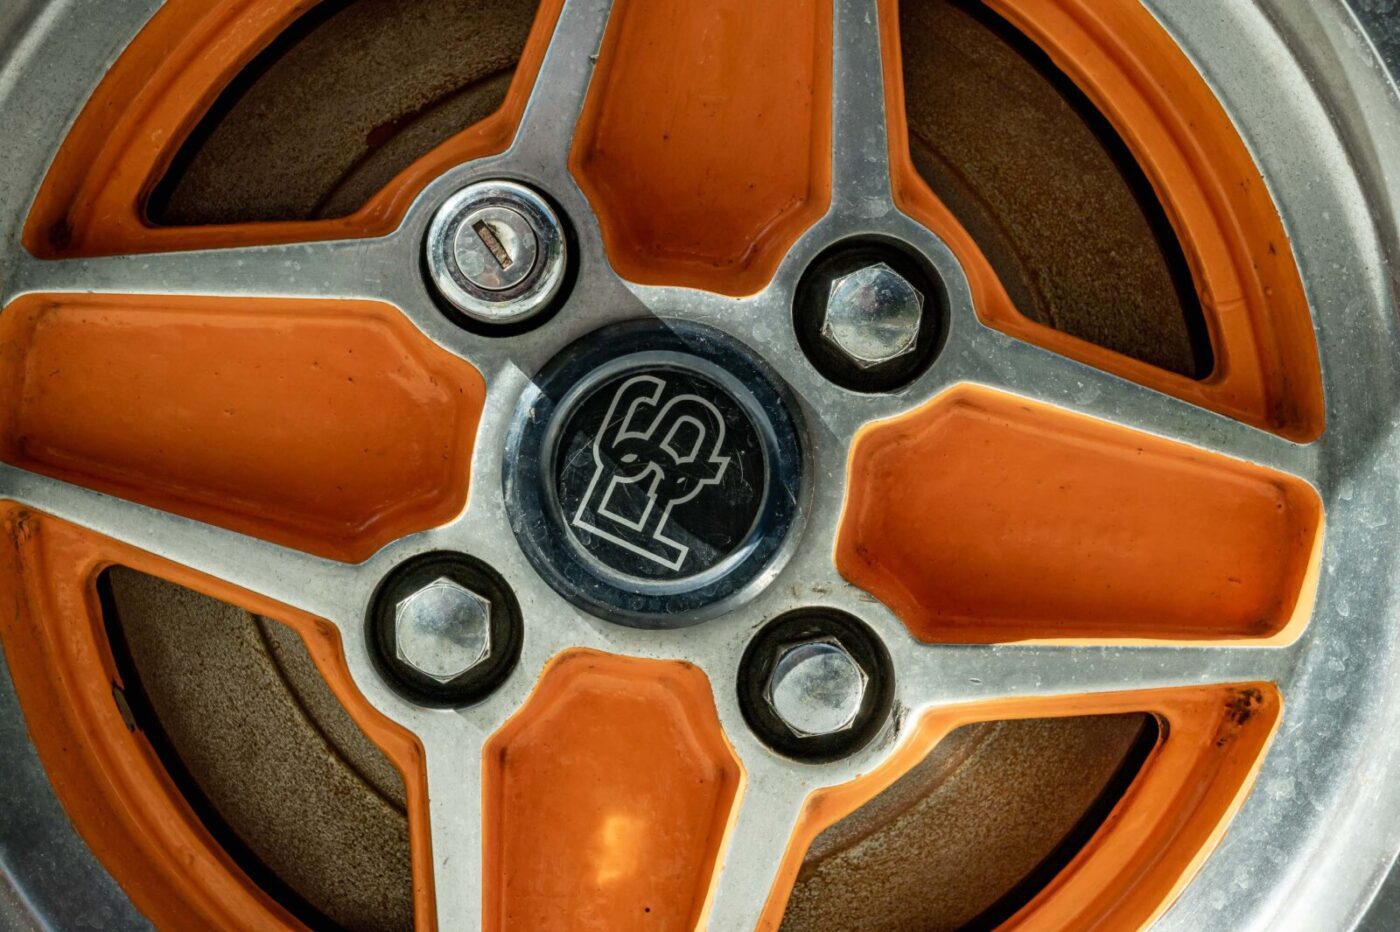 Escort RS2000 wheel painted